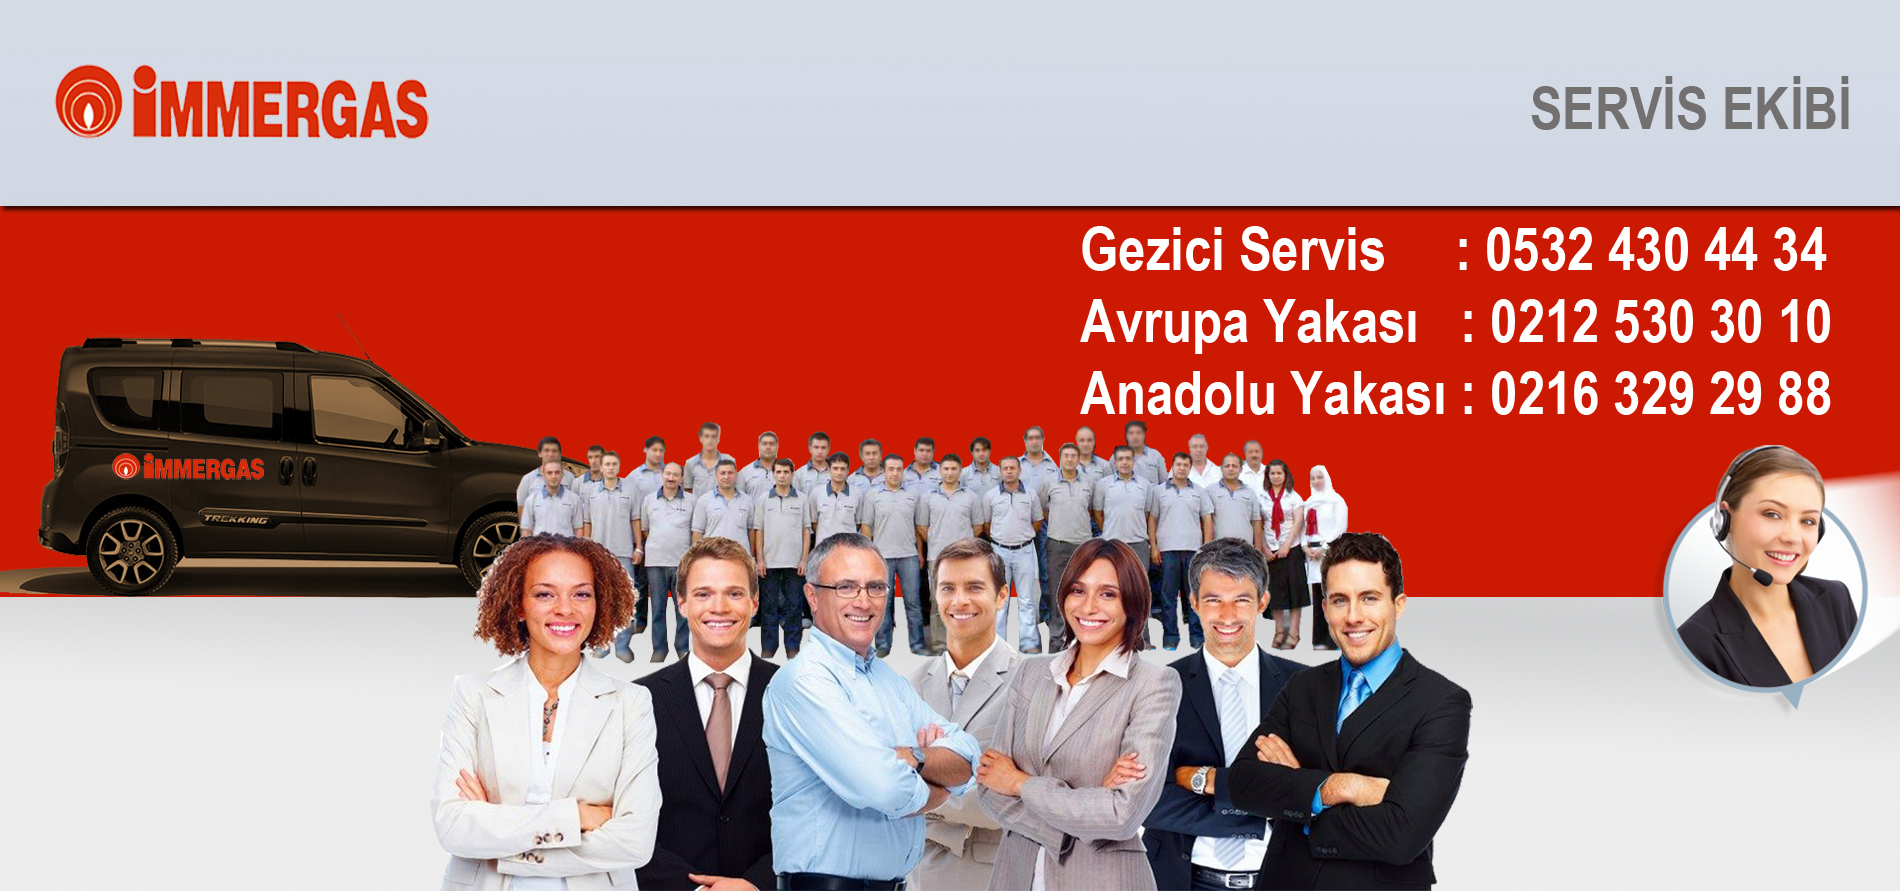  Beşiktaş İmmergas yetkili servis ekibi